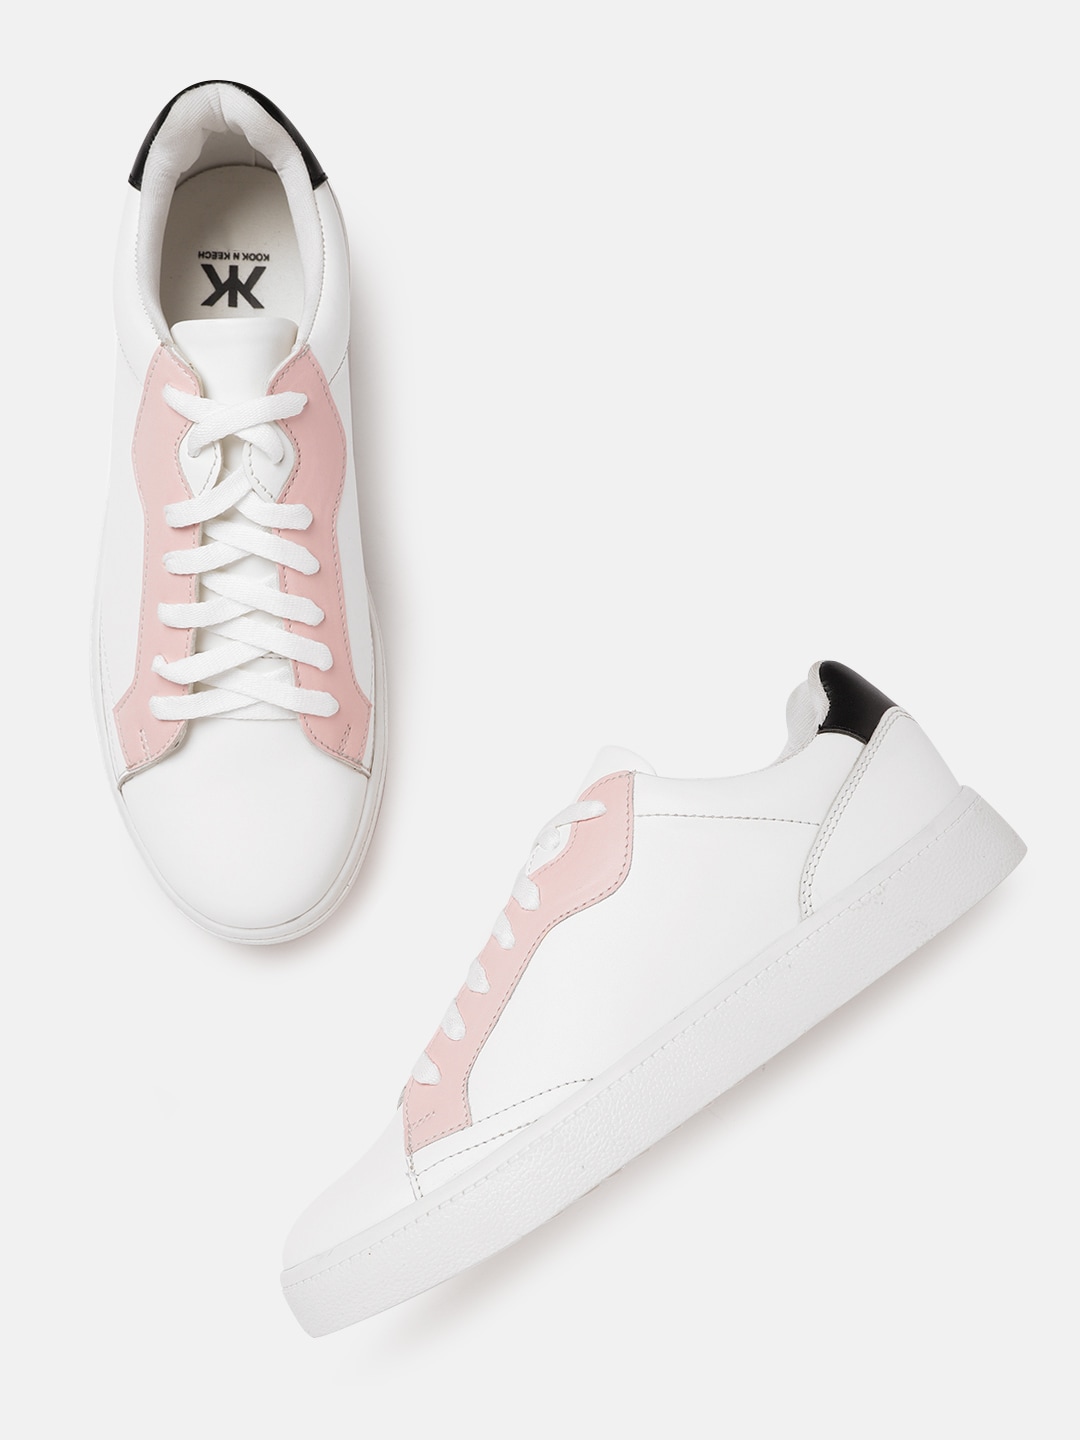 Kook N Keech Women White & Pink Colourblocked Sneakers Price in India